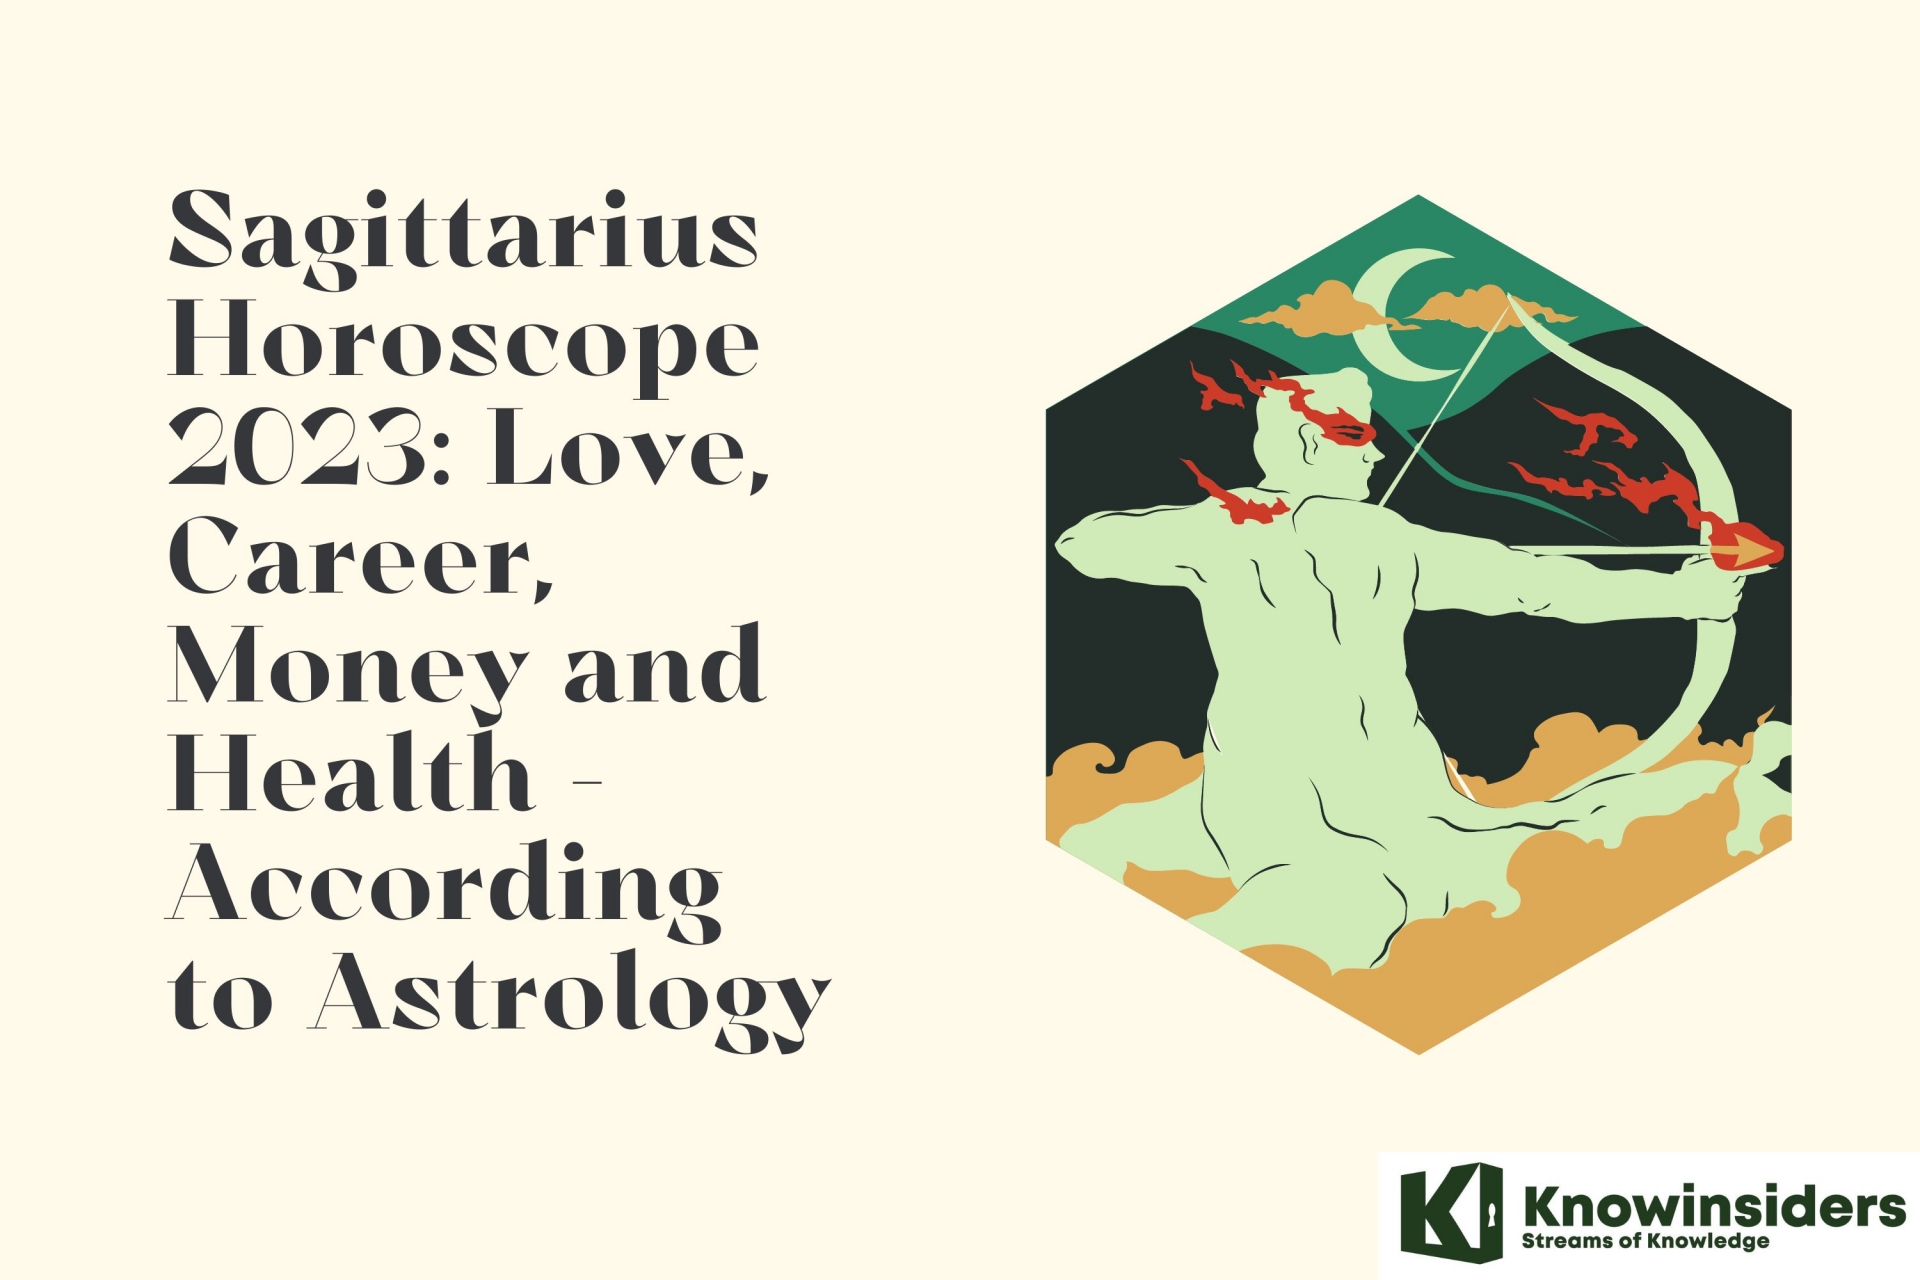 Sagittarius Horoscope 2023: Love, Career, Money and Health - According to Astrology